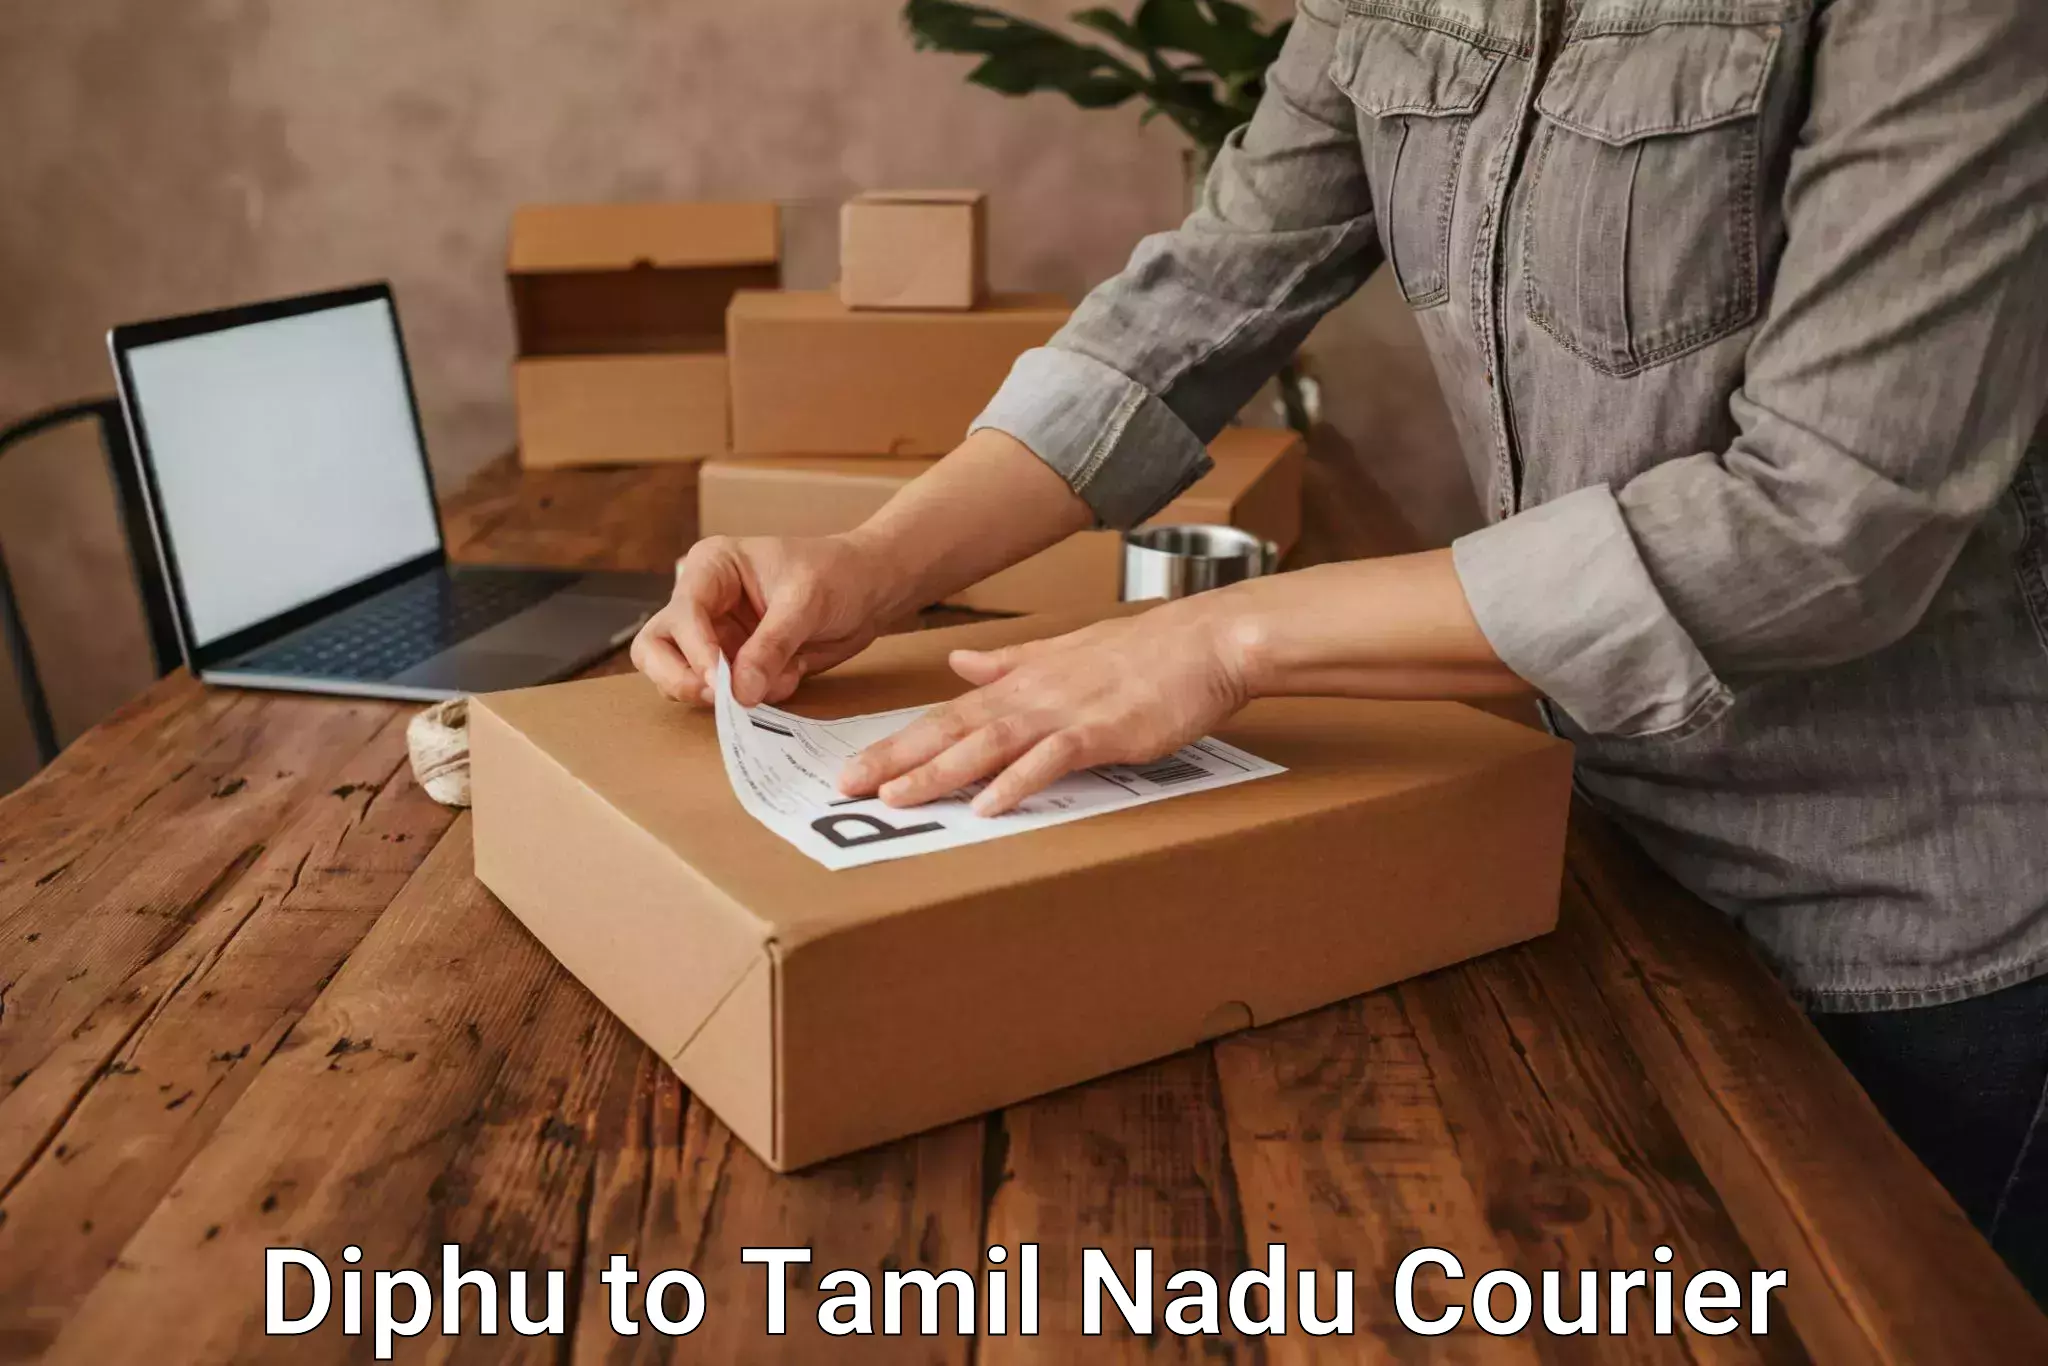 Courier app Diphu to Tiruvallur